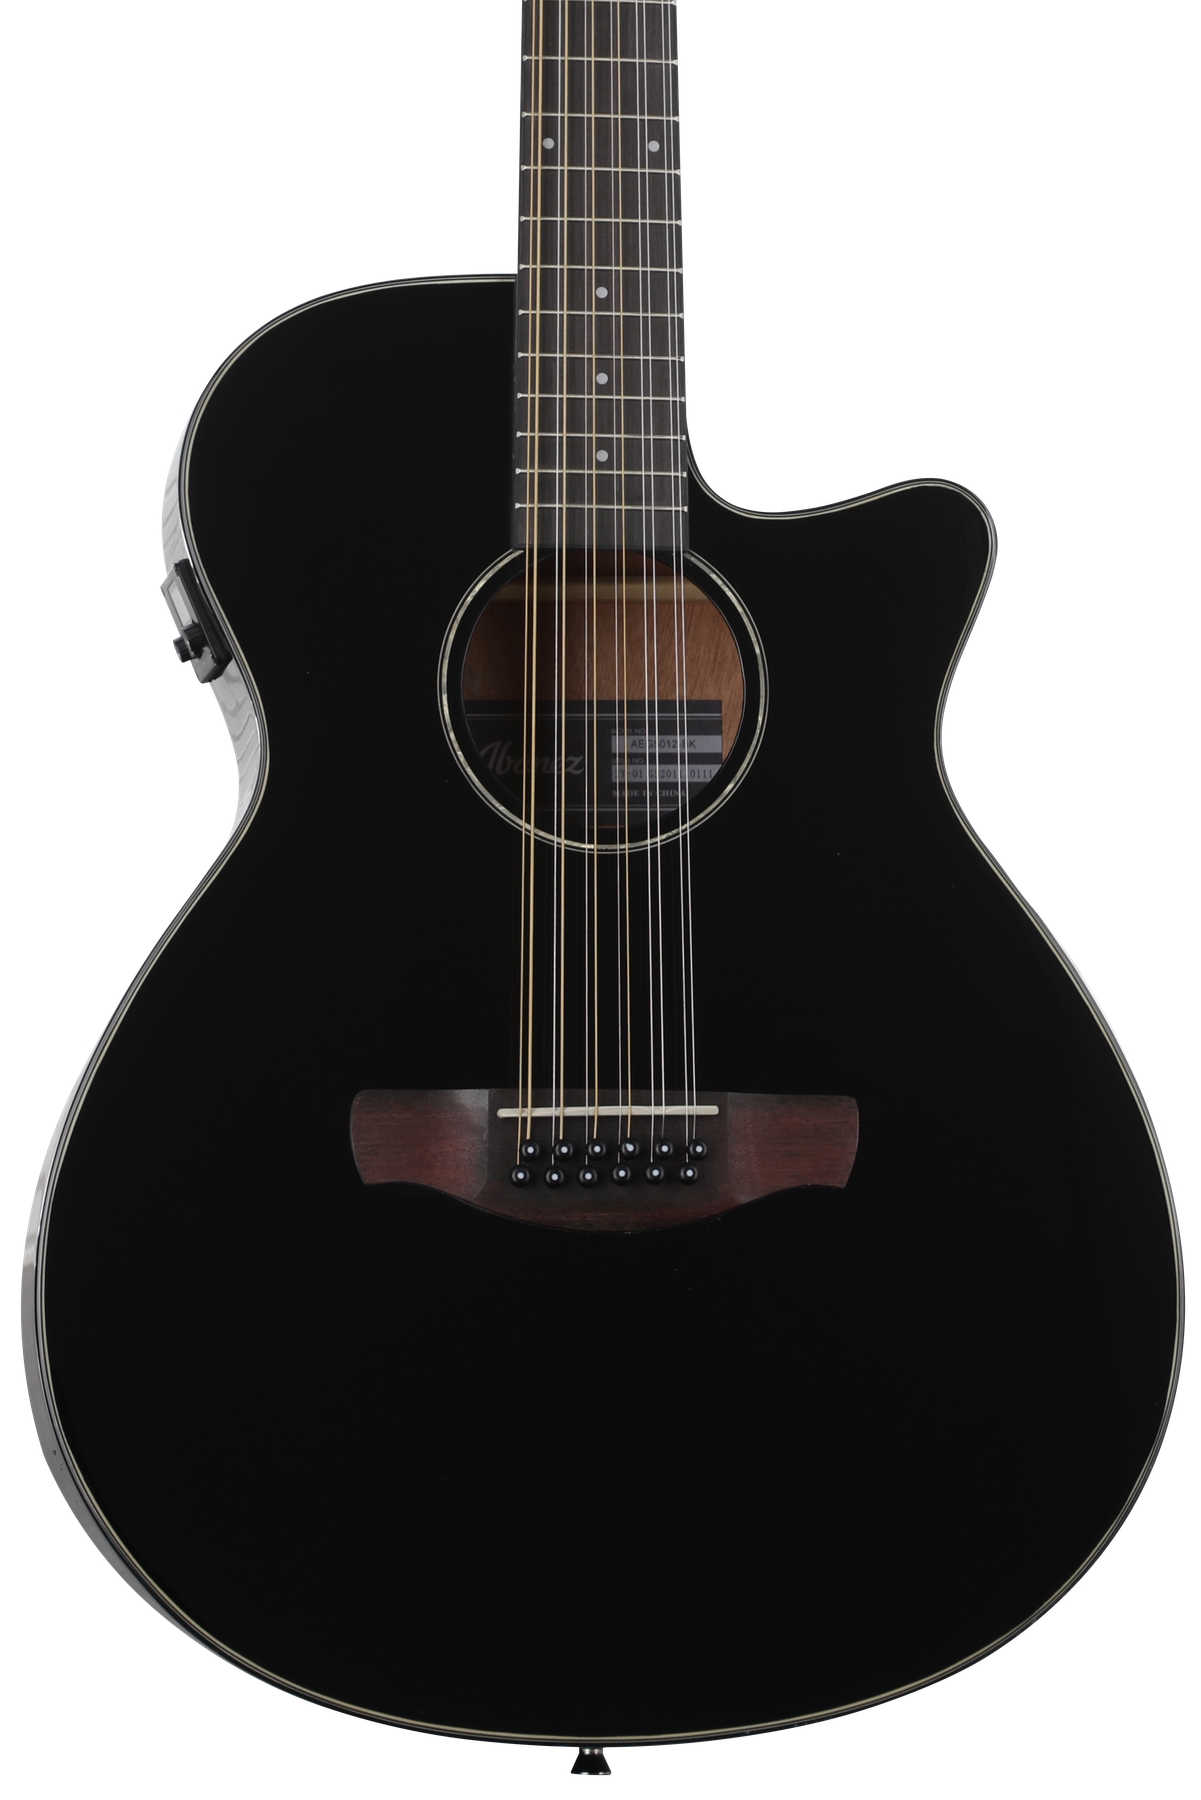 Bundled Item: Ibanez AEG5012 12-string Acoustic-electric Guitar - Black